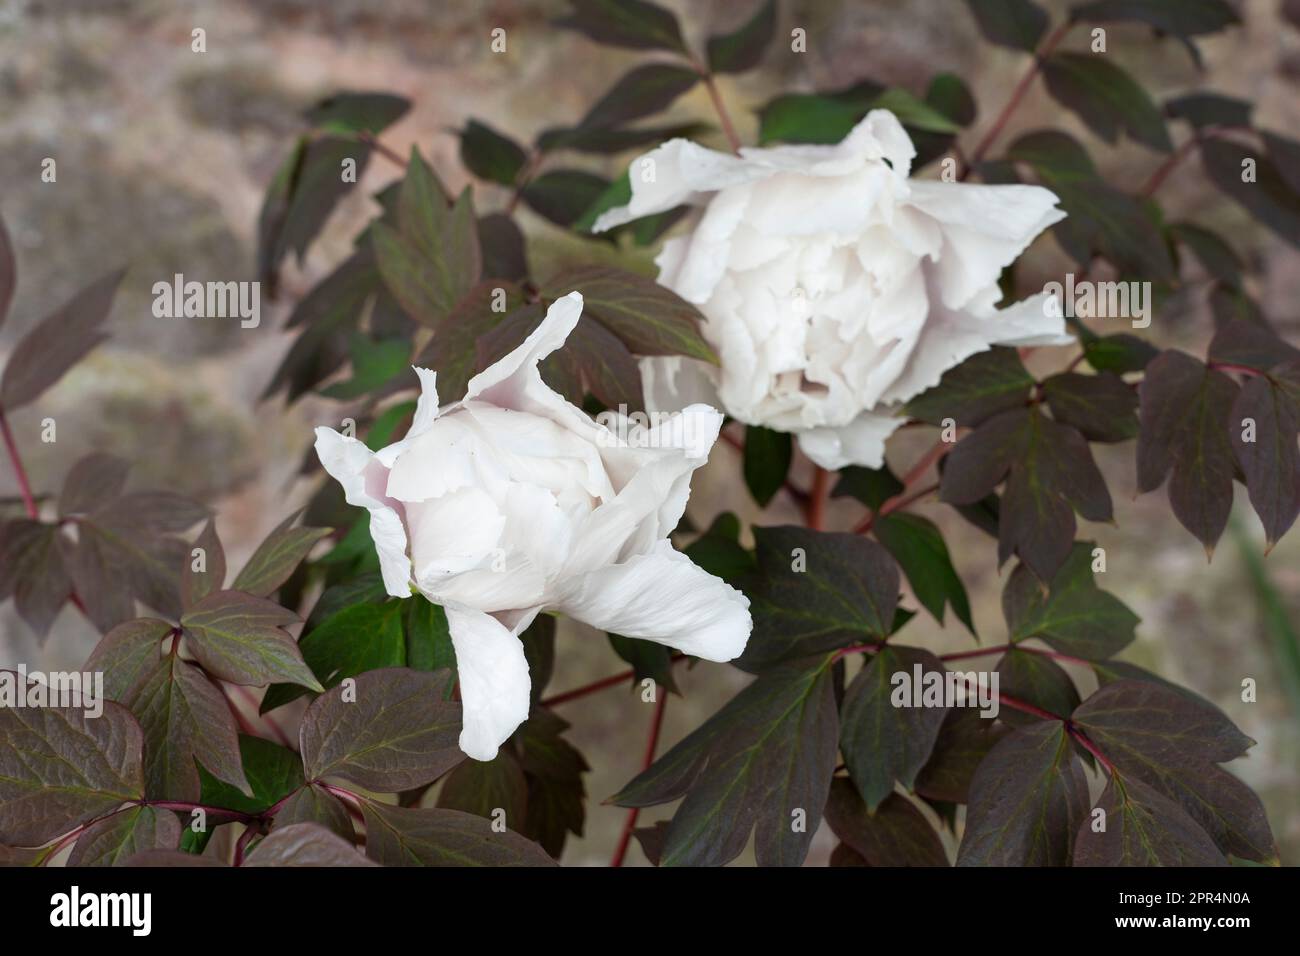 Pure white semi double flowers of Paeonia suffruticosa 'Renkaku', common name Tree Peony, in a garden in spring, Wales, UK Stock Photo